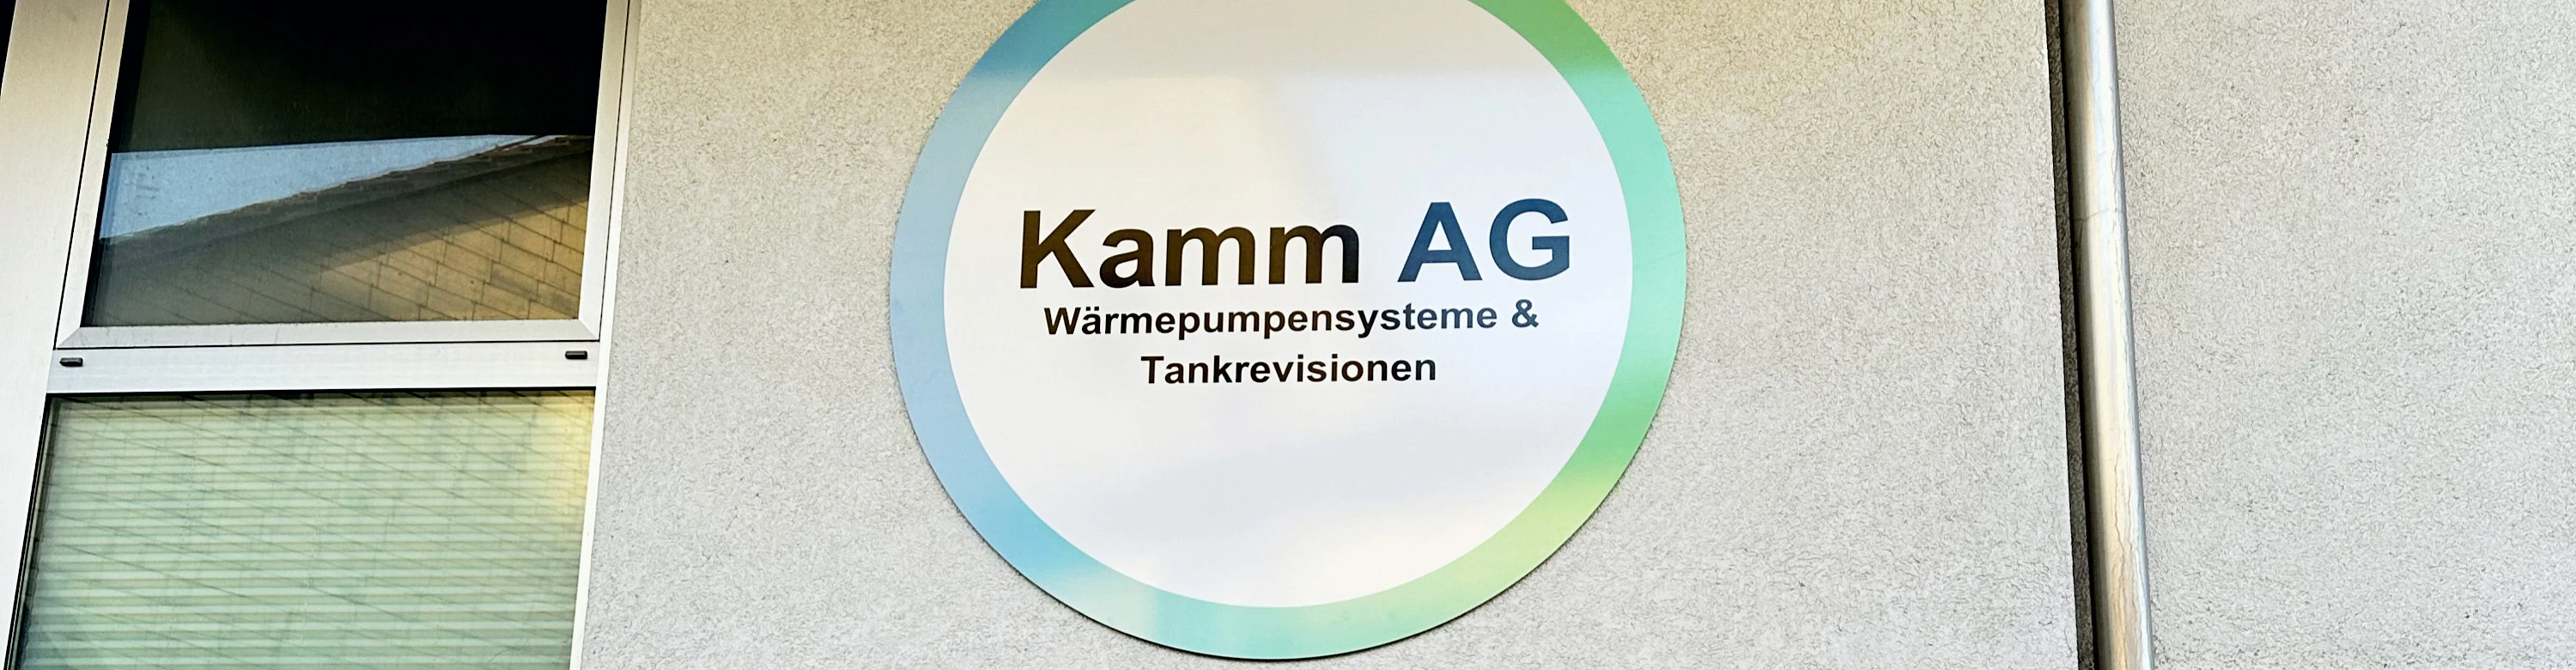 Kamm AG Wärmepumpensysteme & Tankrevisionen